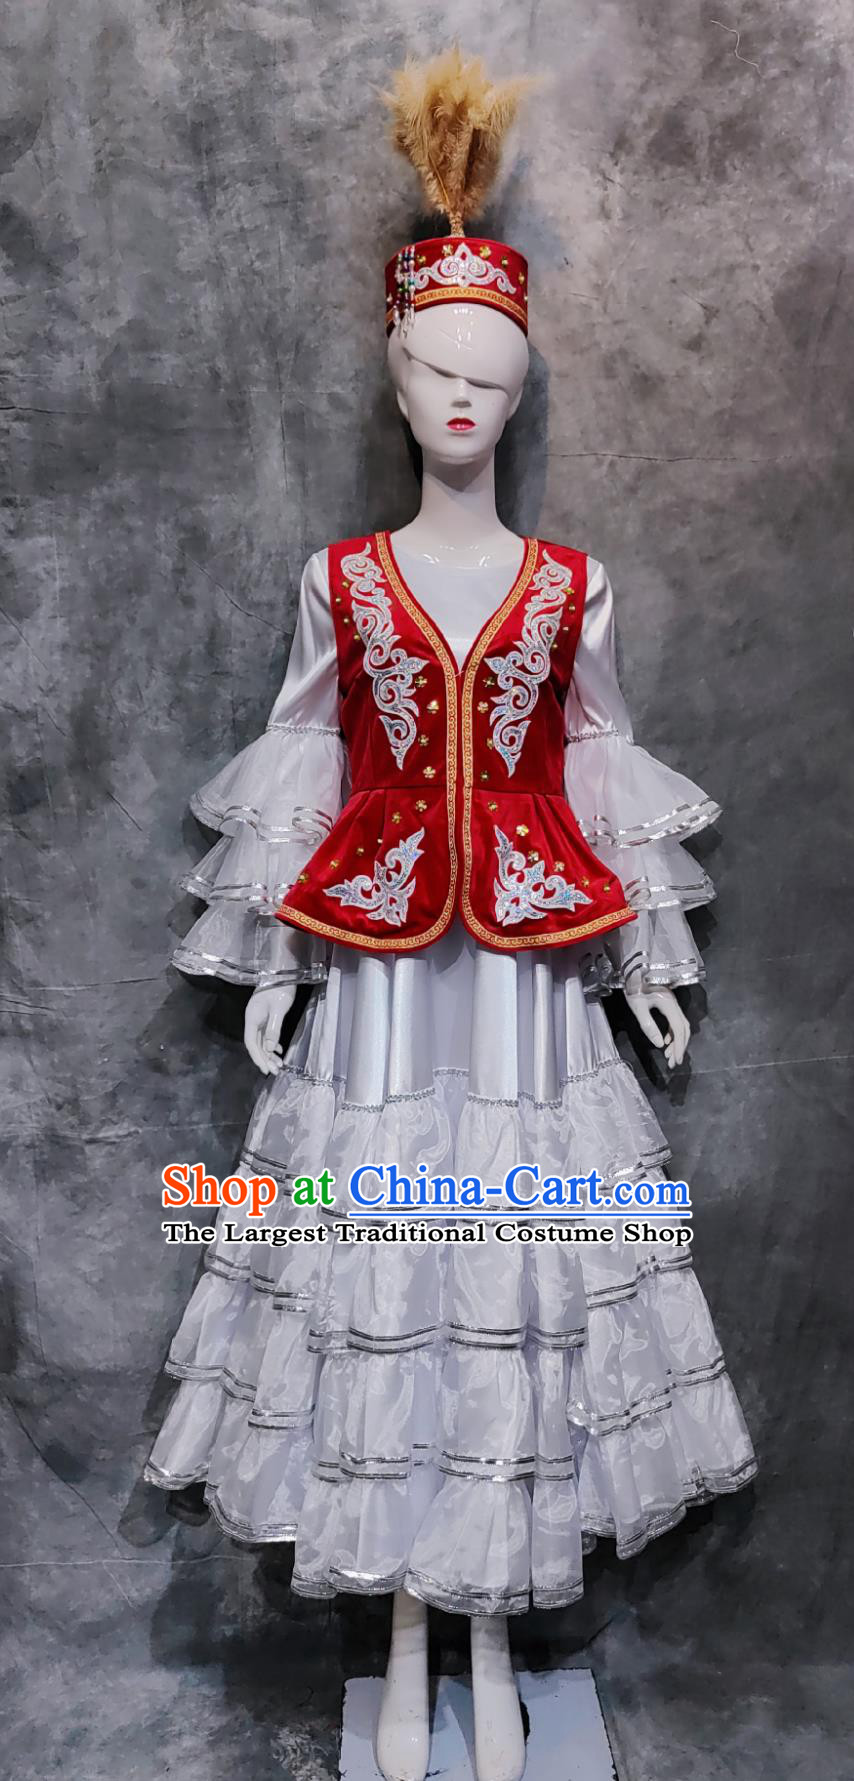 China Xinjiang Folk Dance Costume Kazakh Ethnic Woman Clothing Chinese Kazak National Minority Stage Performance Red Vest and Dress